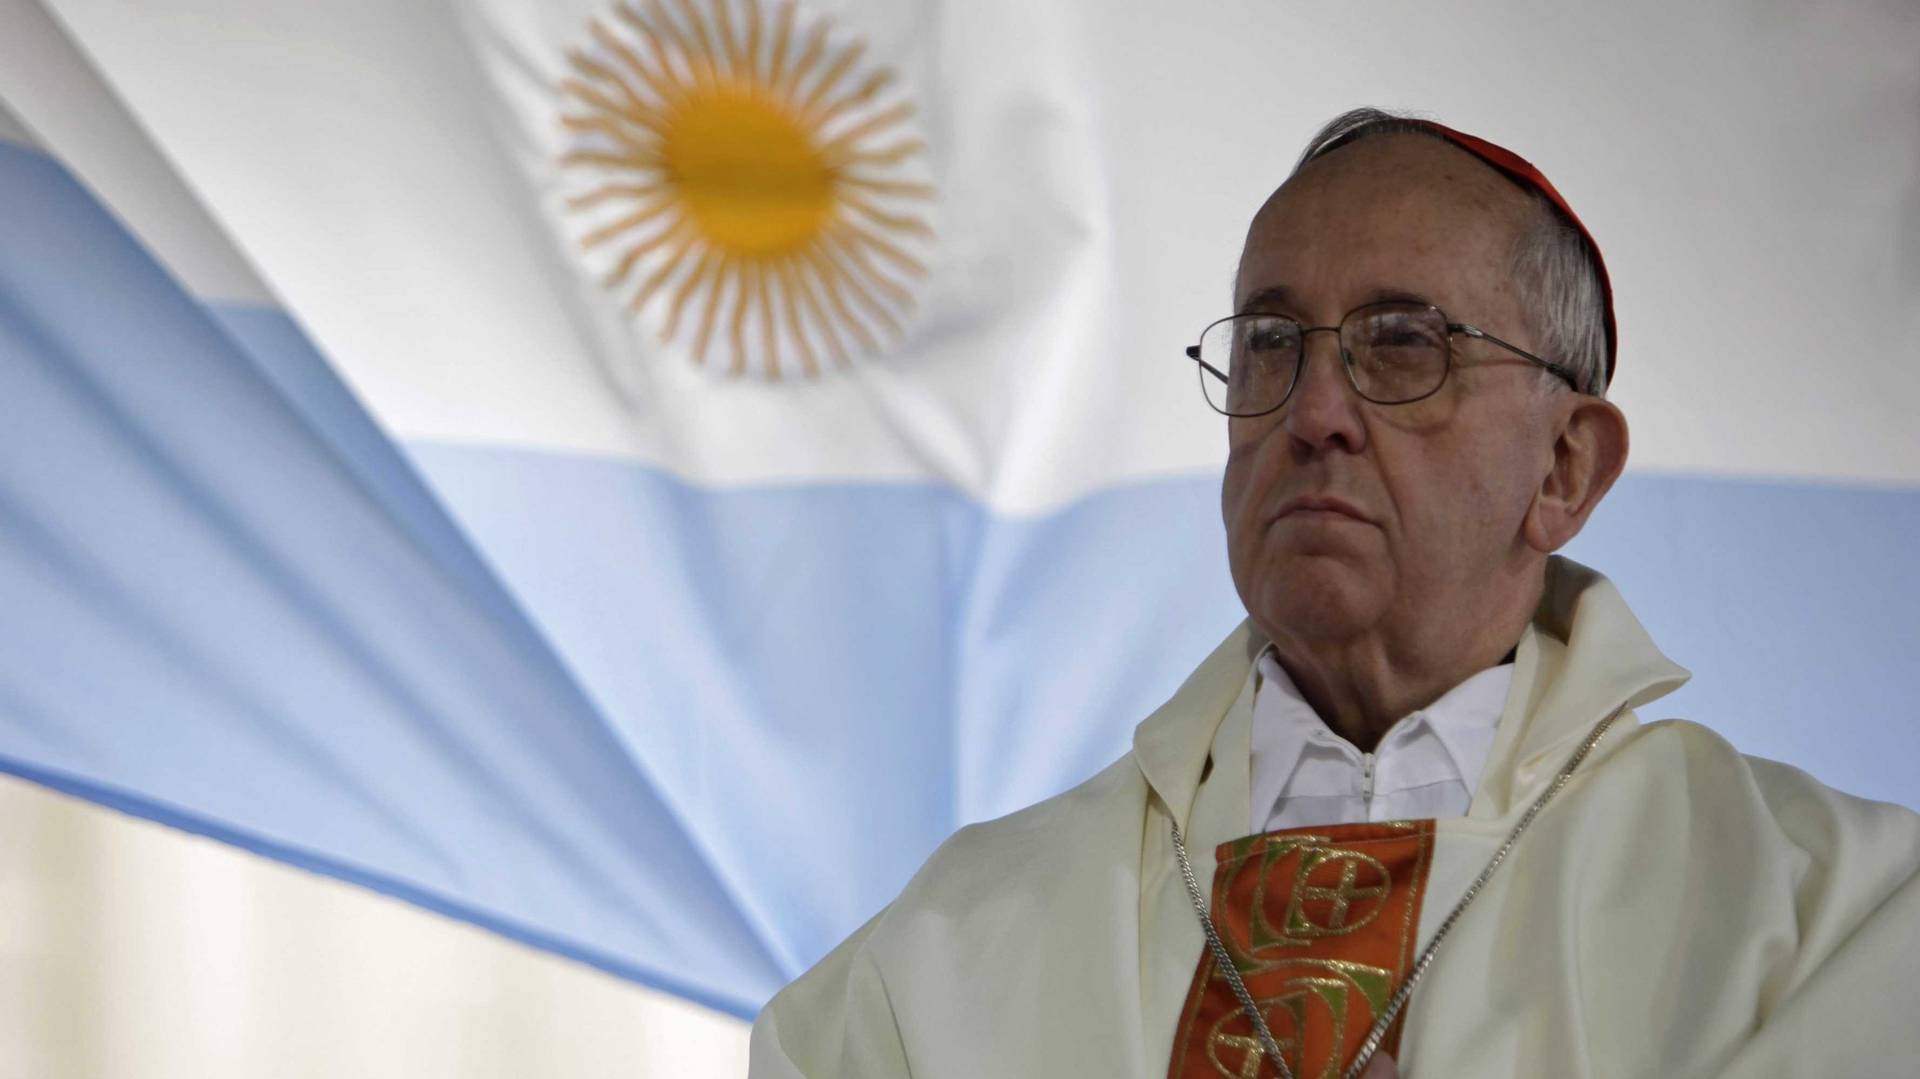 A Social Conservative Pope Francis Led Effort Against